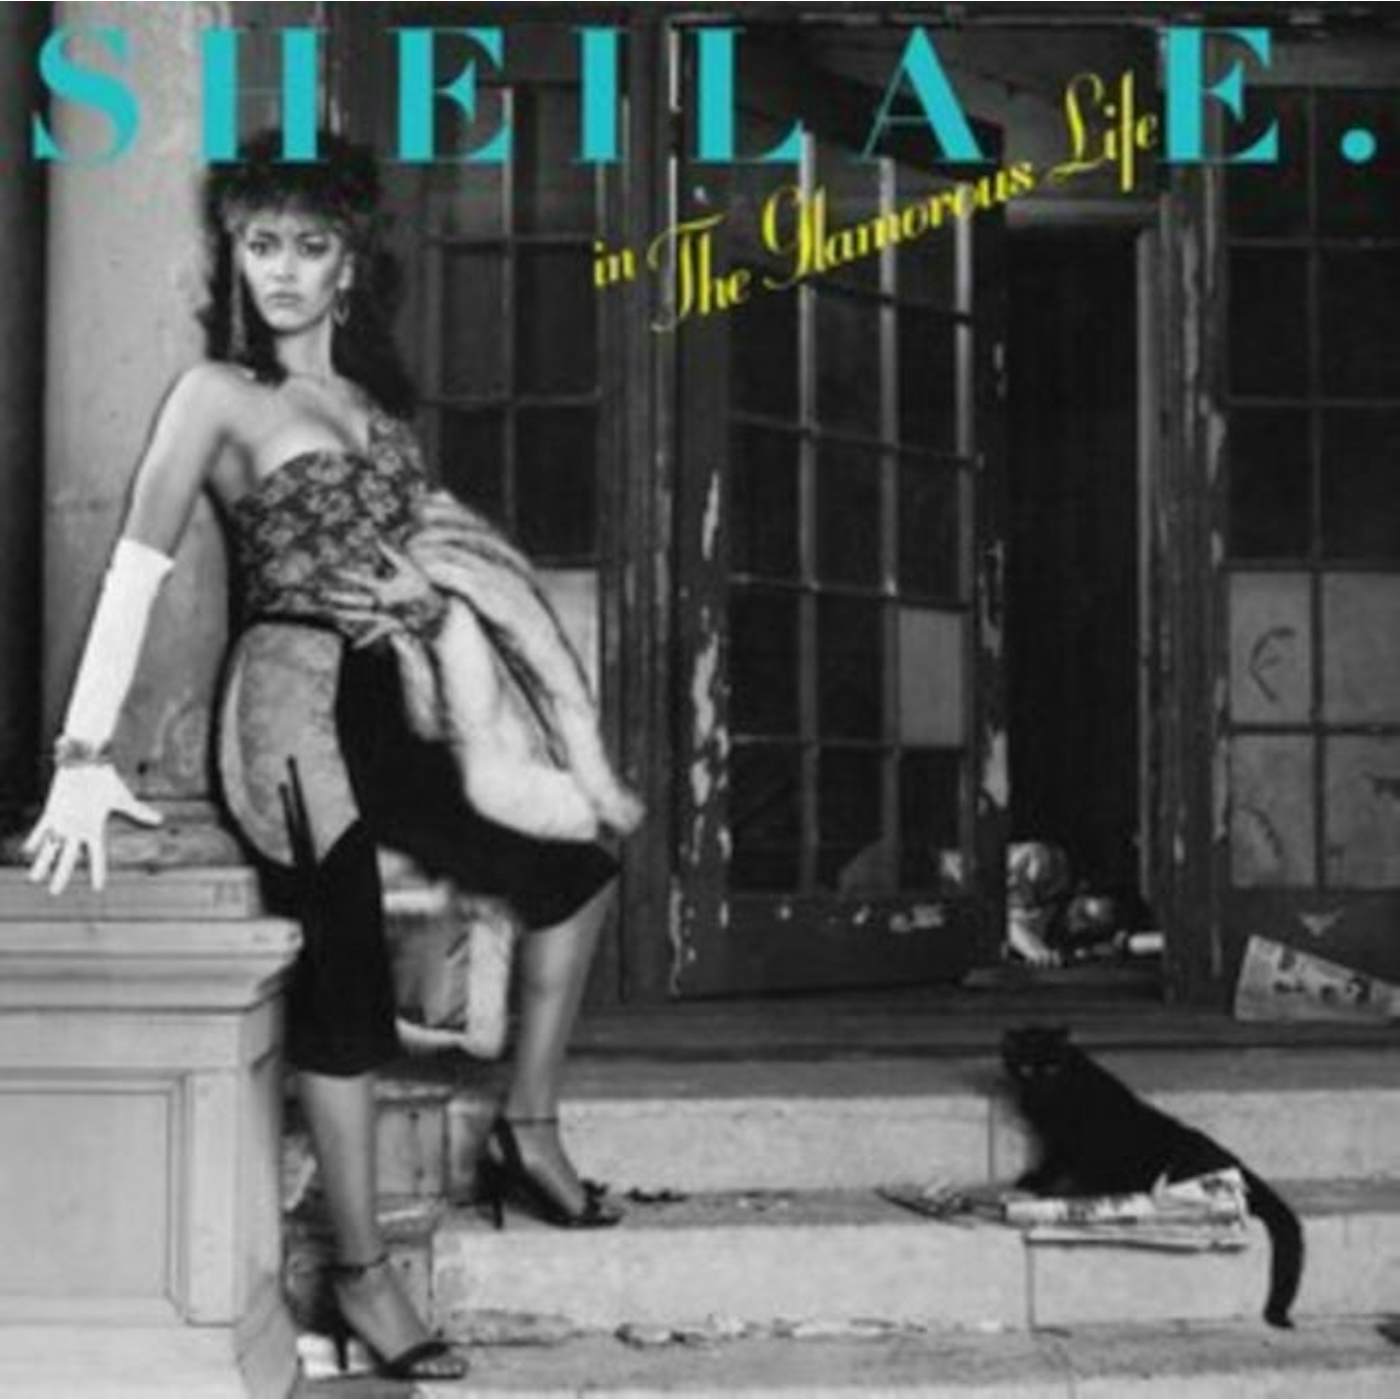 Sheila E. LP Vinyl Record - The Glamorous Life